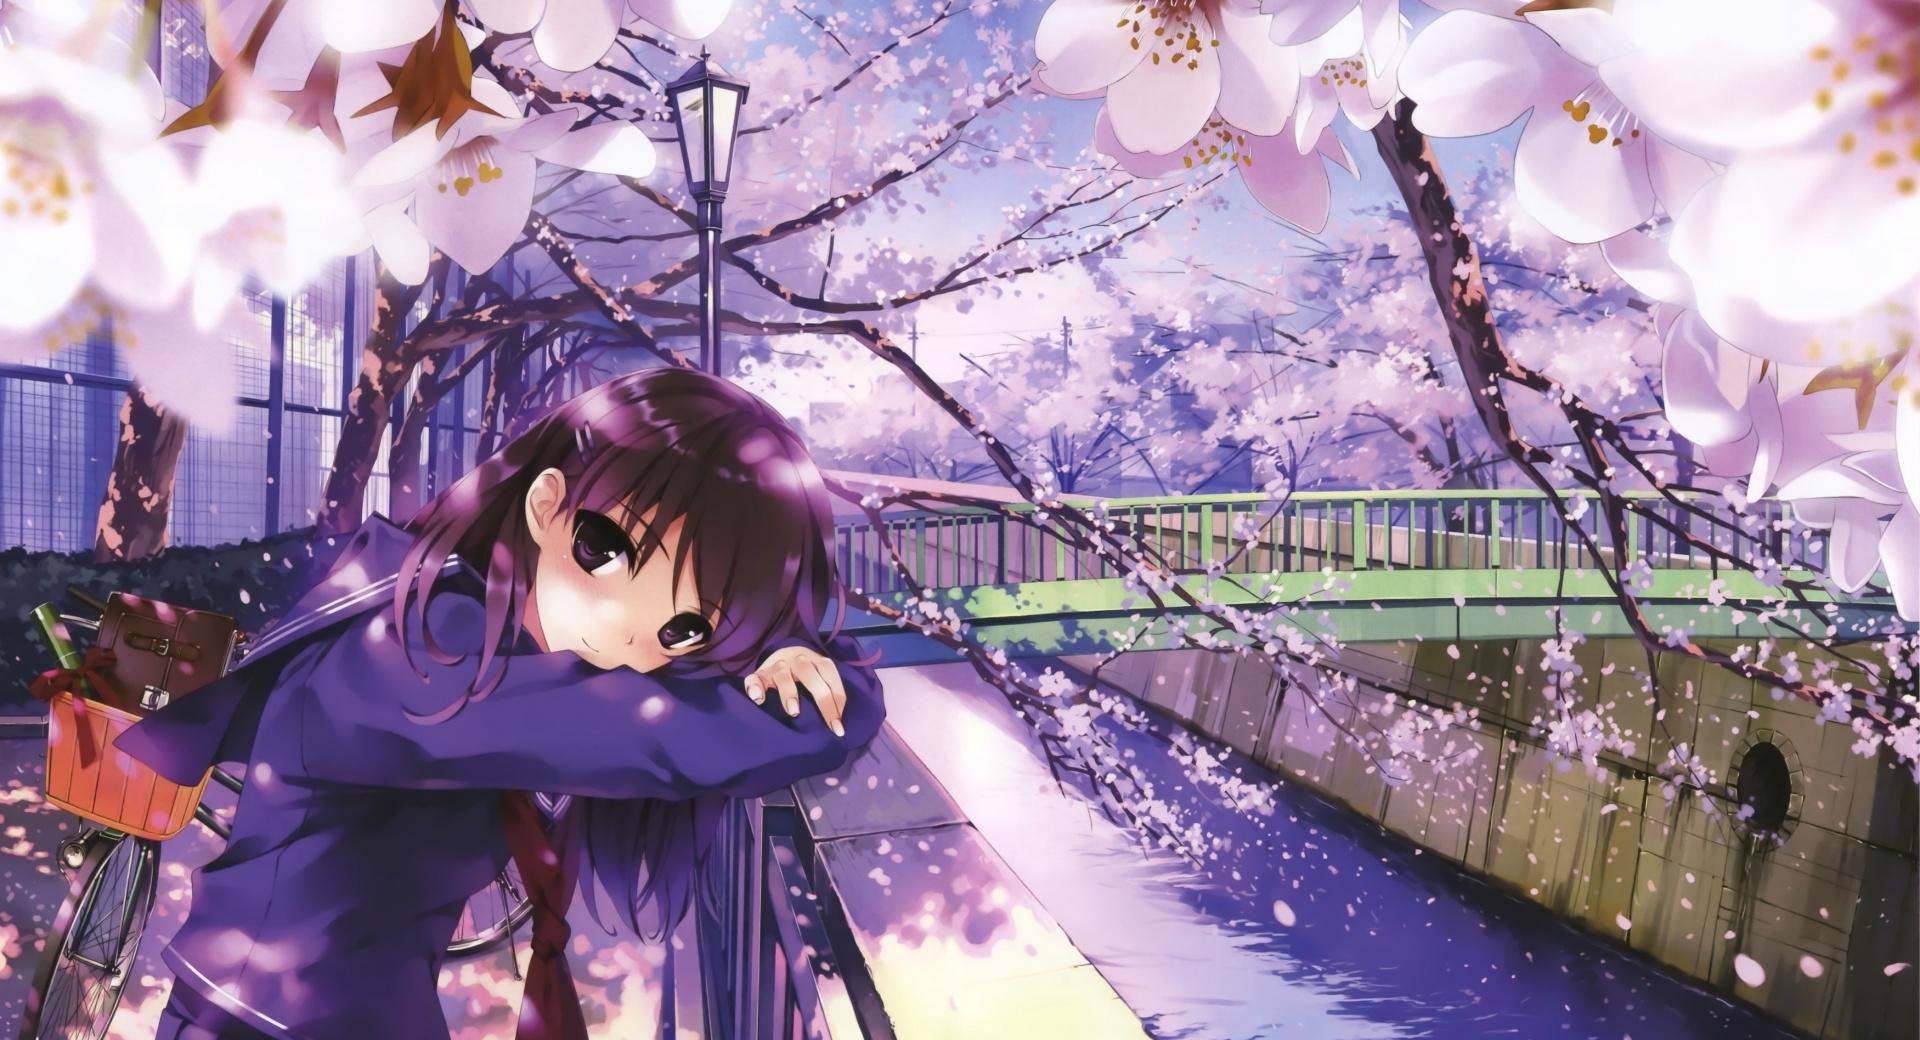 Sakura Spring at 1280 x 960 size wallpapers HD quality